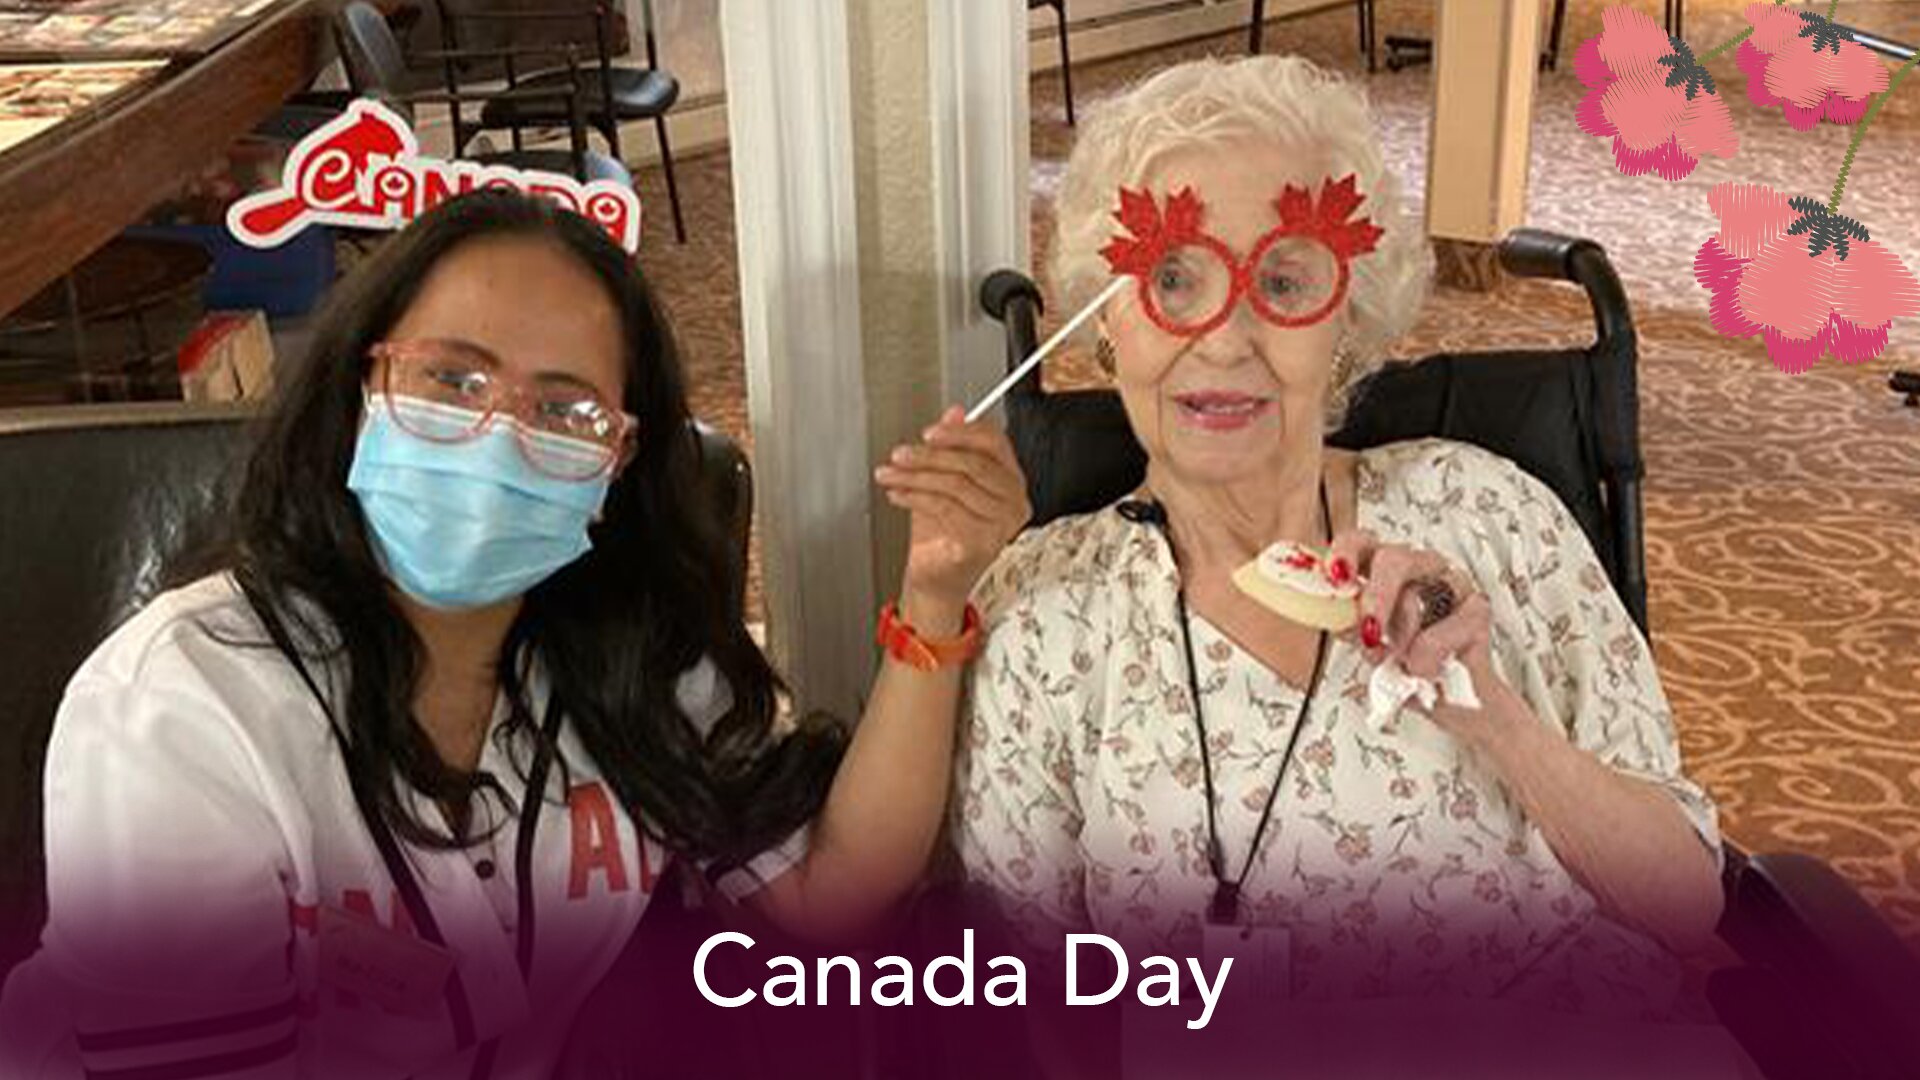 Canada Day celebrations at Wild Rose senior living